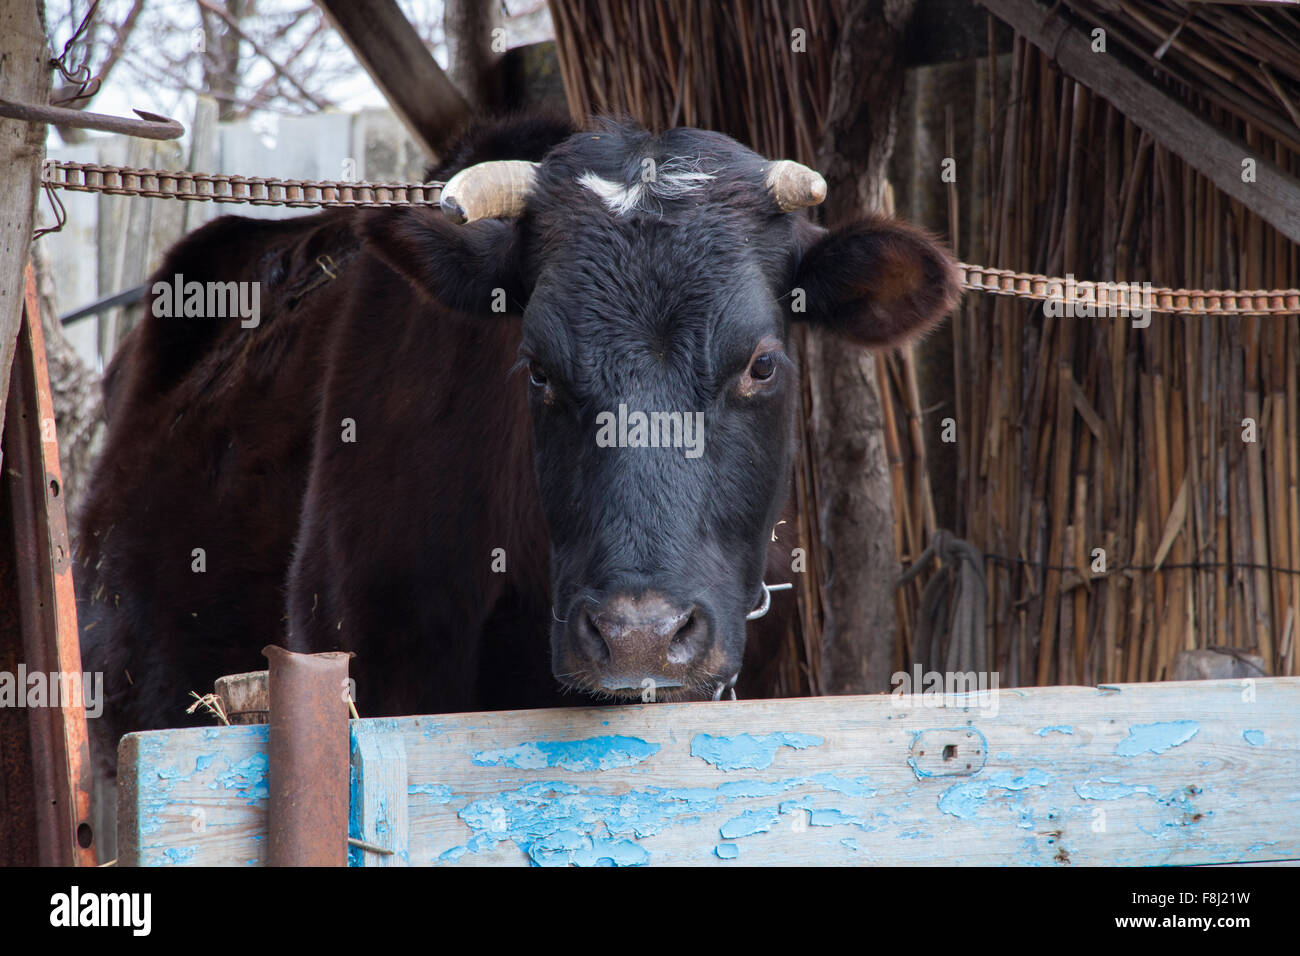 Black Cow in paddock Stock Photo